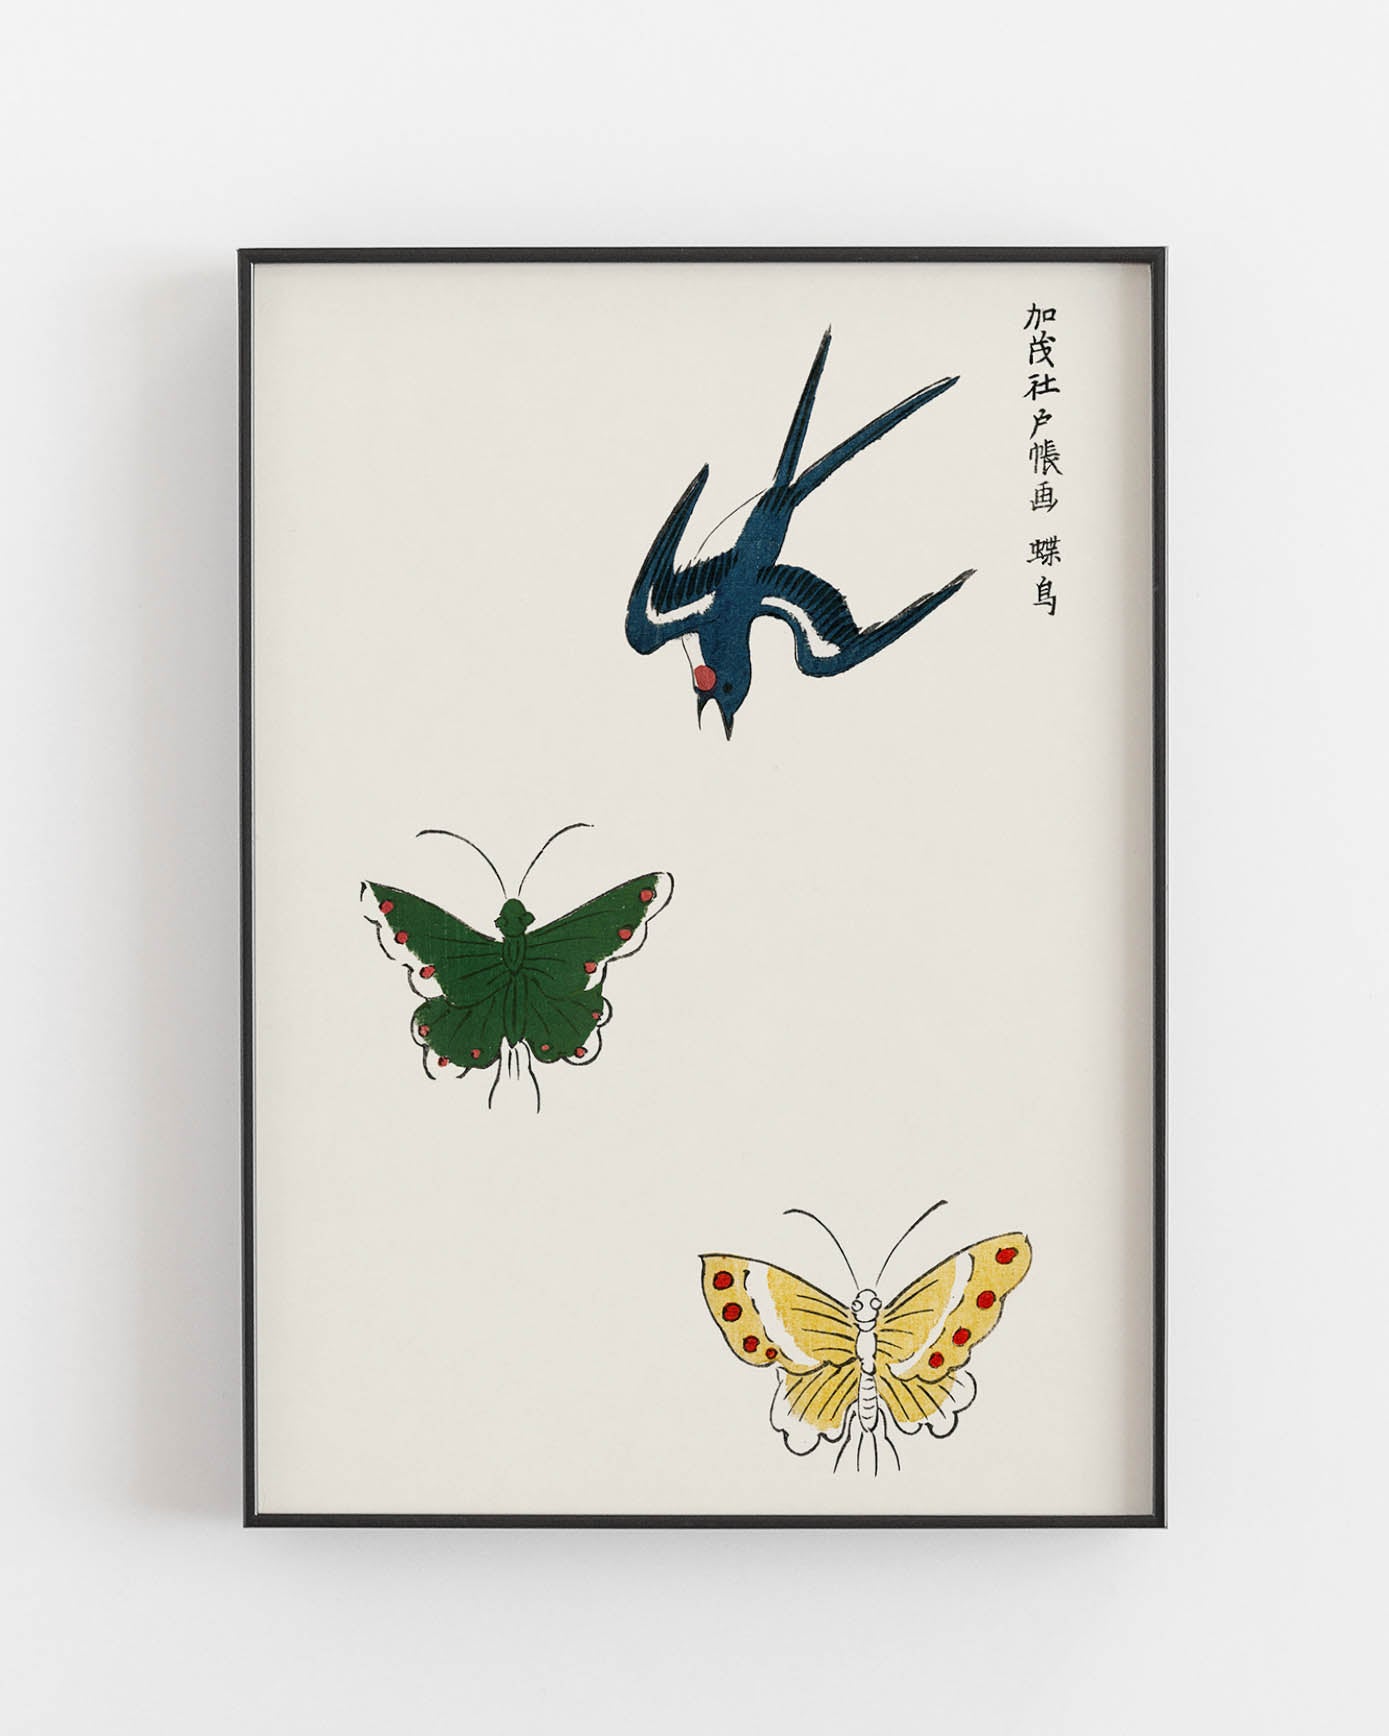 Japanese Vintage Original Woodblock Print Of Swallow And Butterflies by Taguchi Tomoki